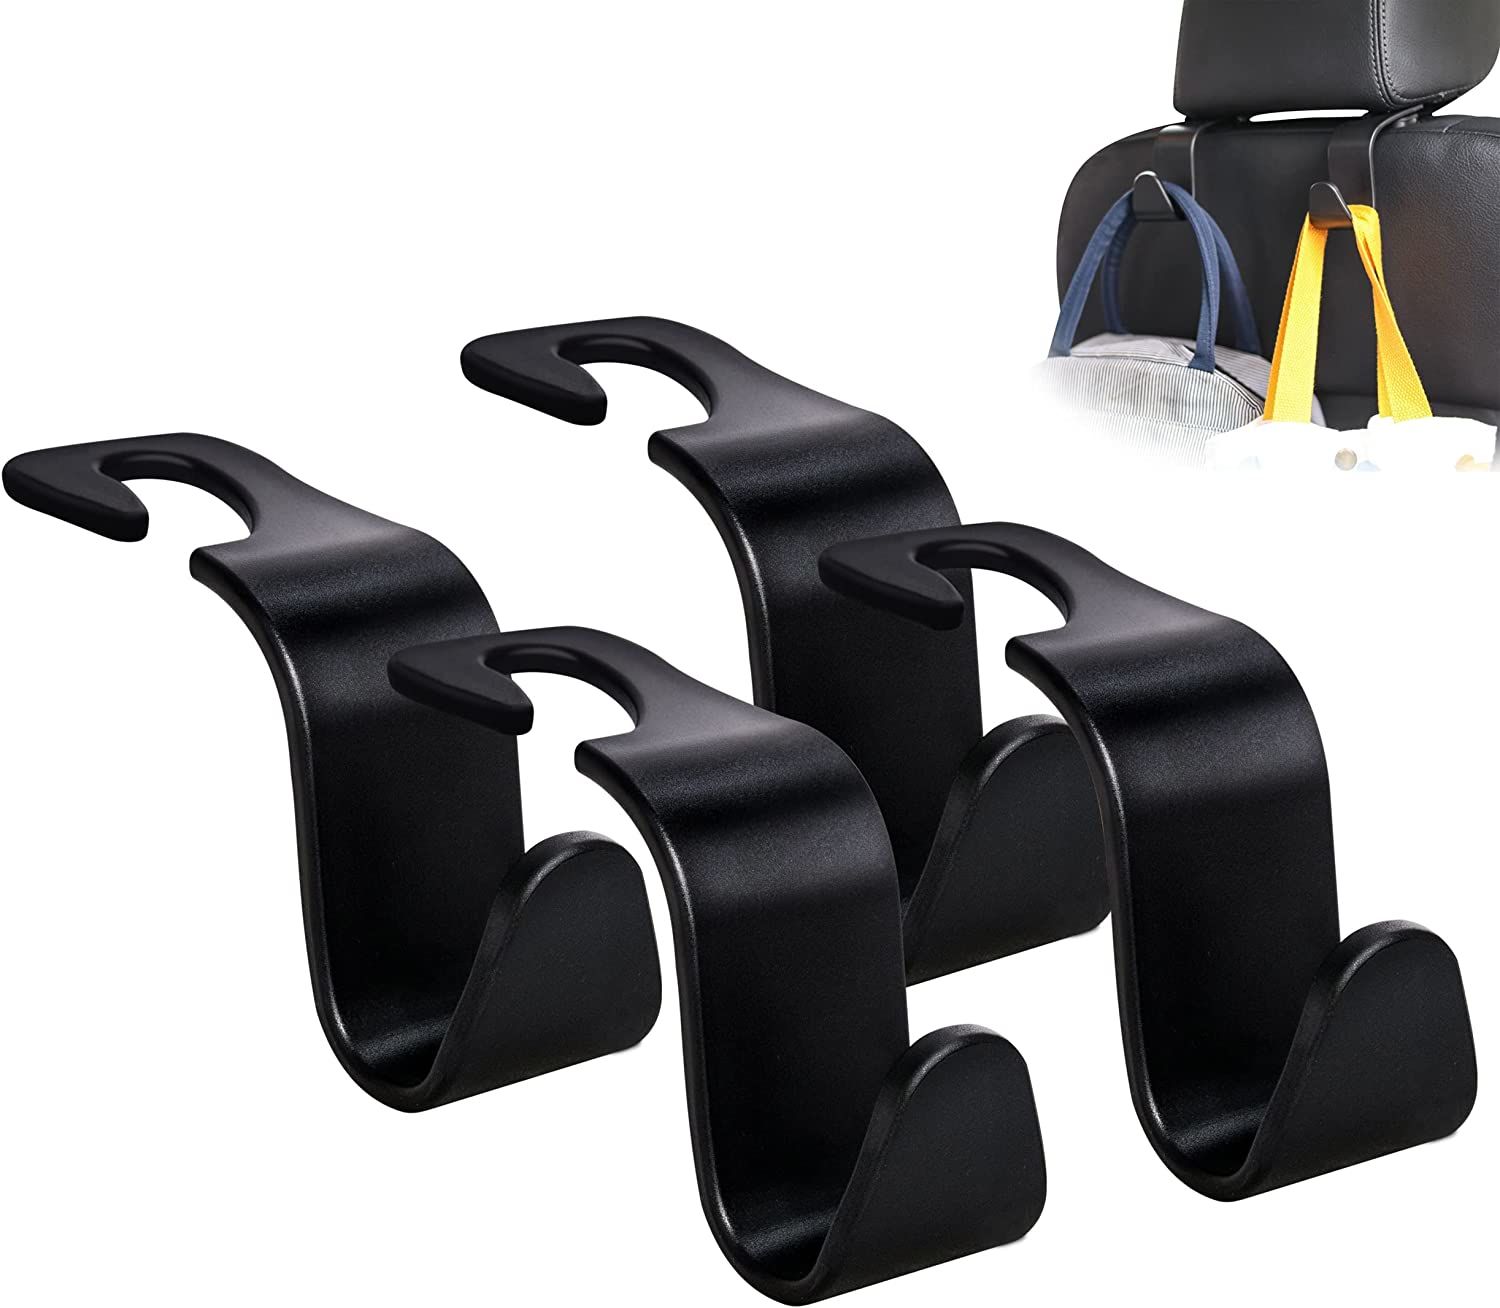 Double Head Car Seat Hooks Headrest Hanger Handbag Hanging Holder